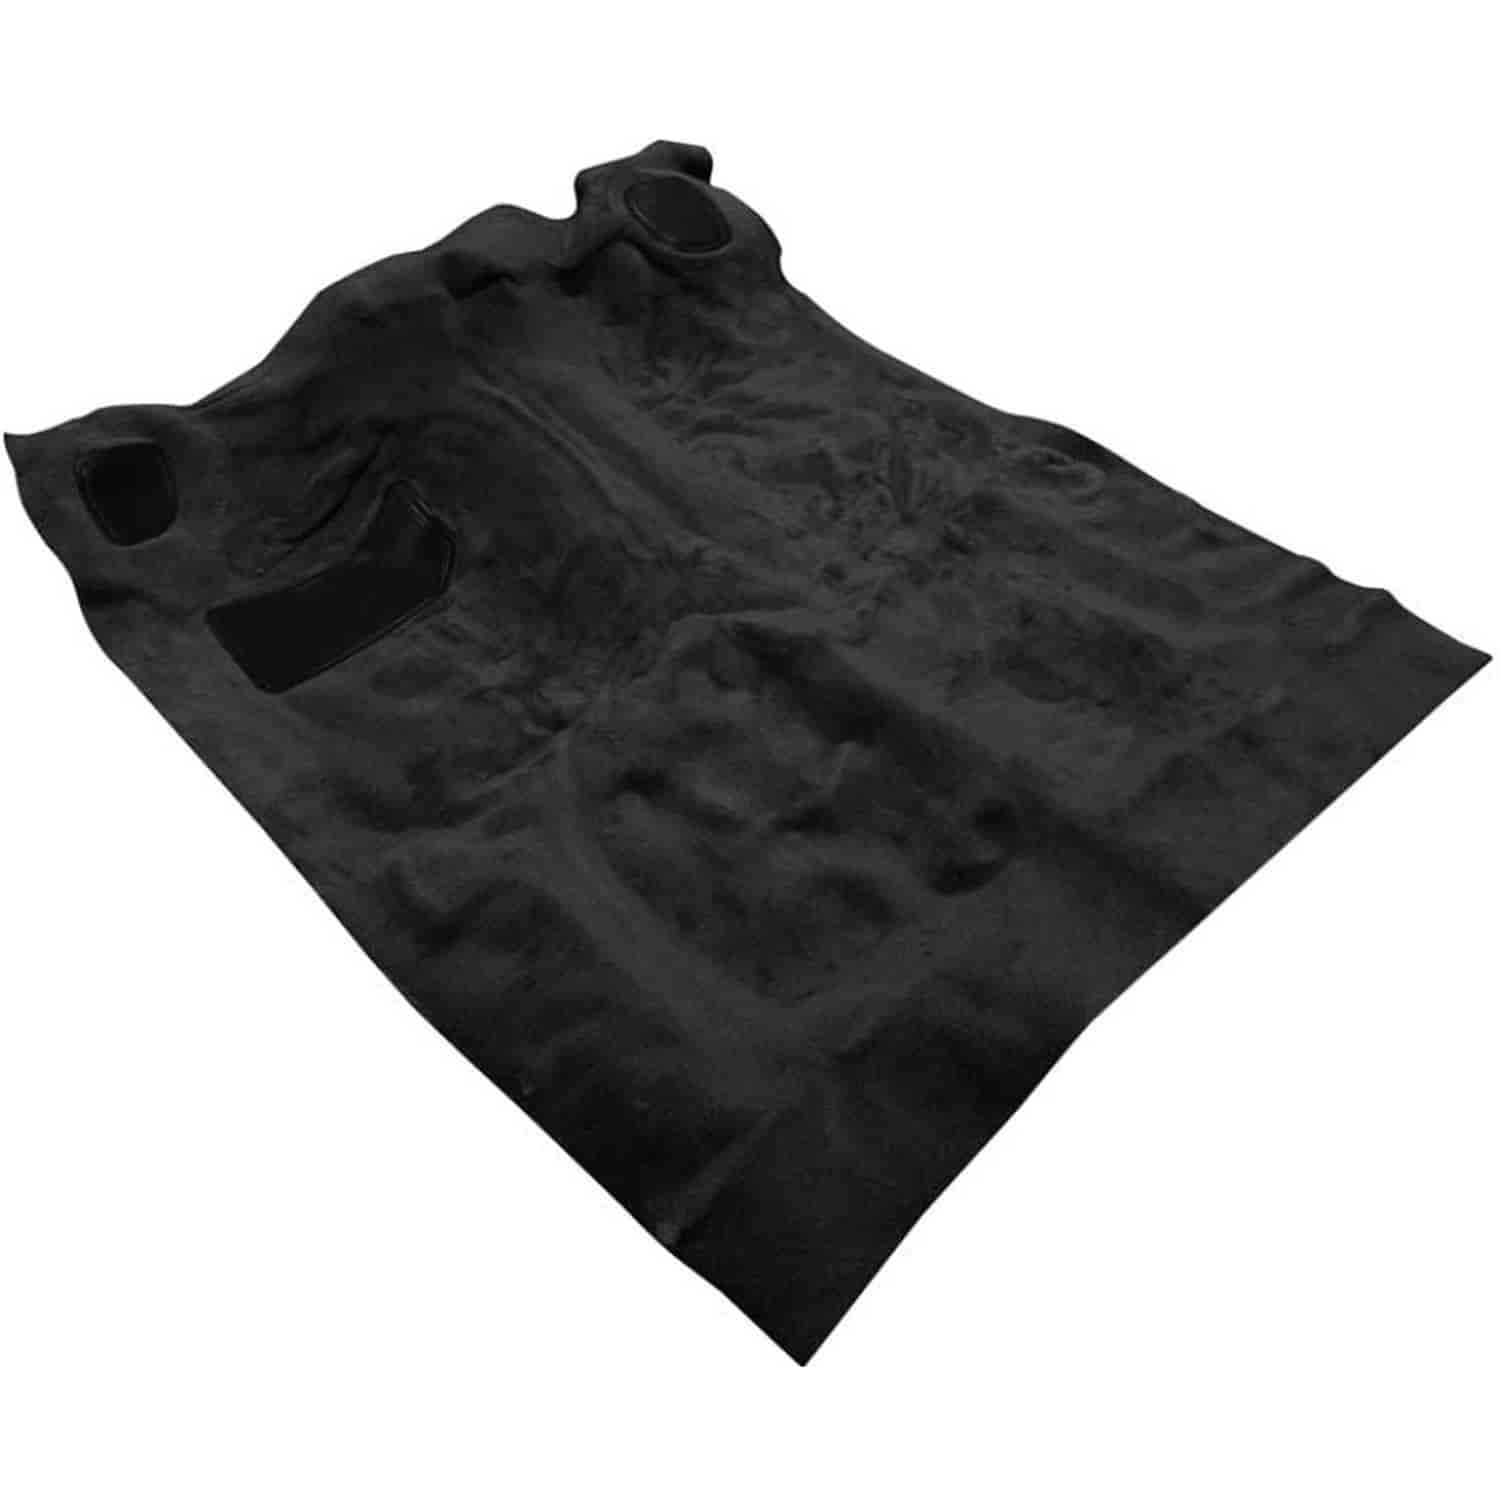 Molded Cut Pile Carpet Set 1994-1998 S10/S15 Pickup Standard Cap Black